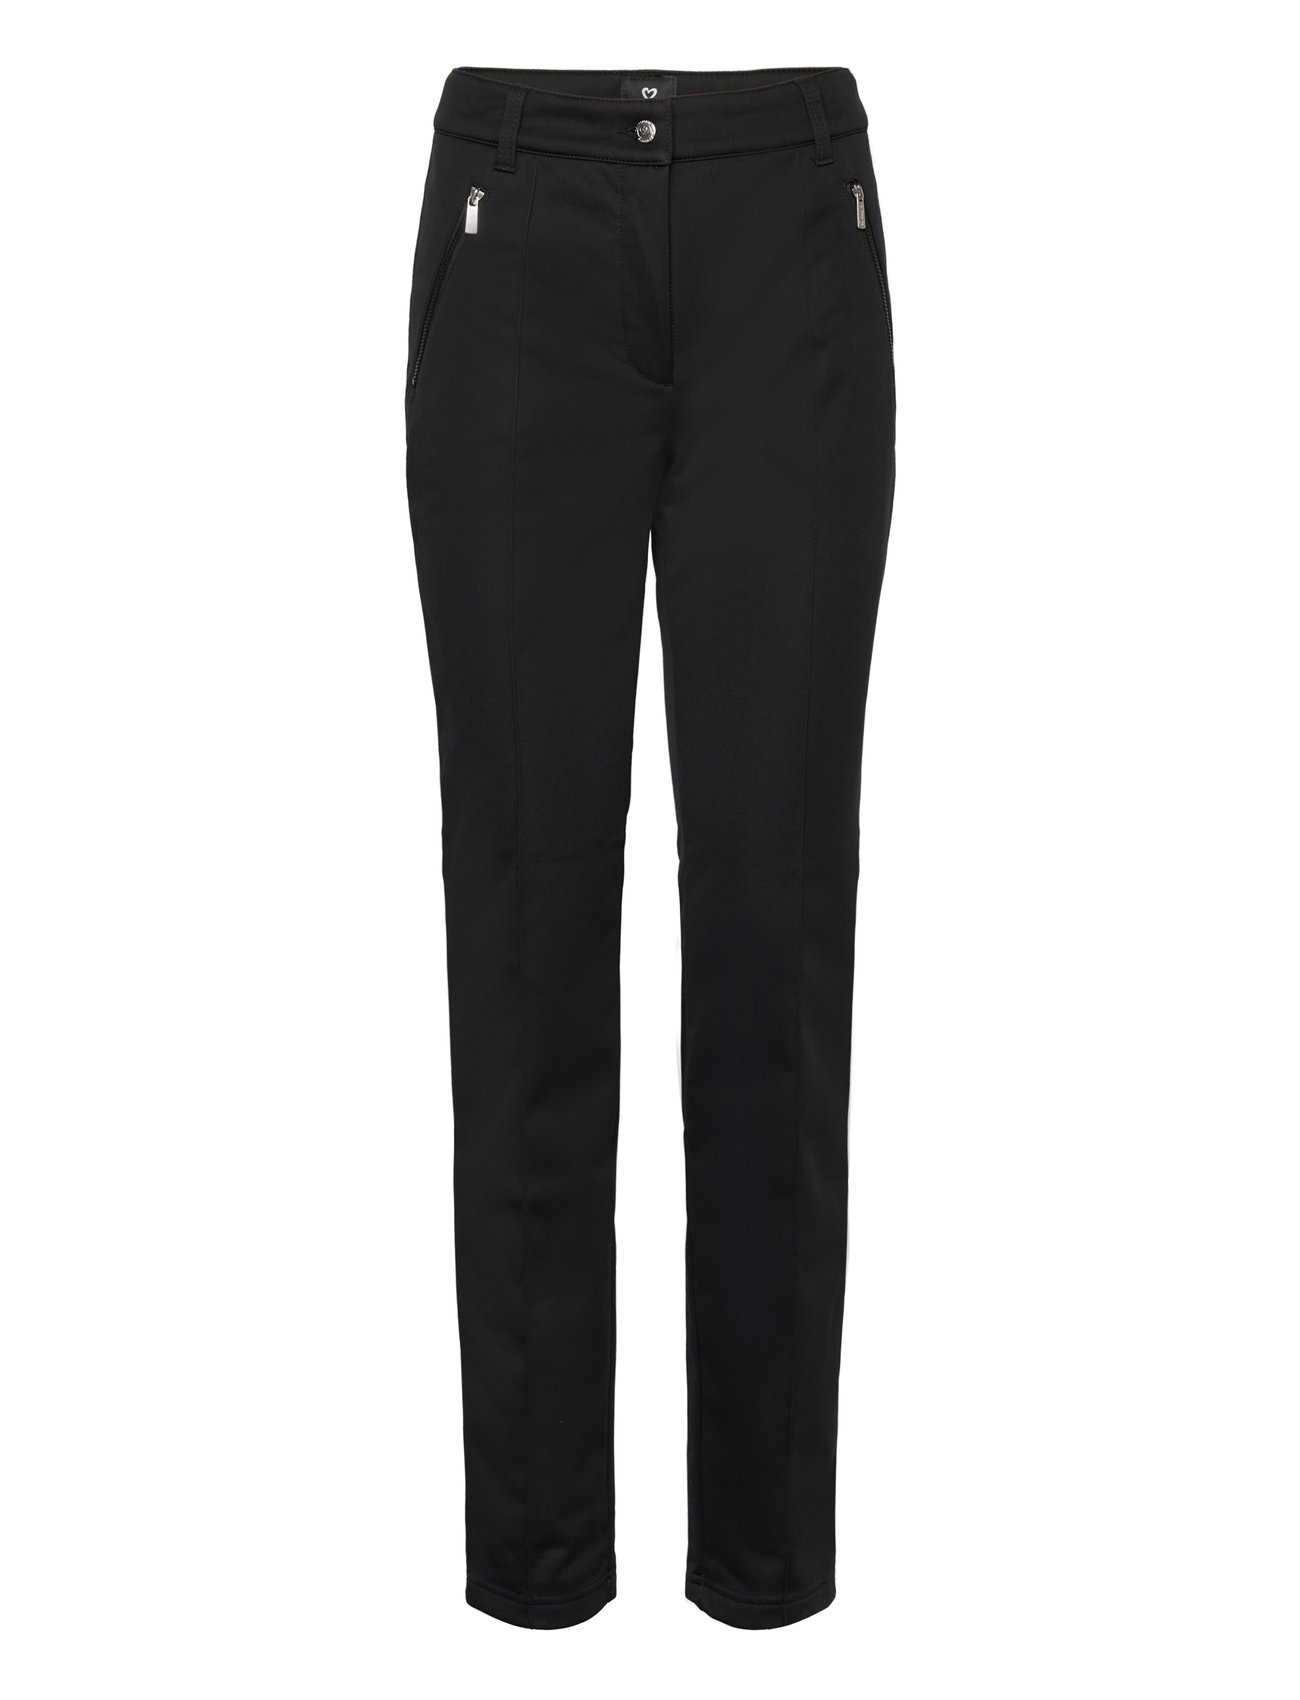 Daily Sports Alexia Pants 32 Inch – pants – shop at Booztlet